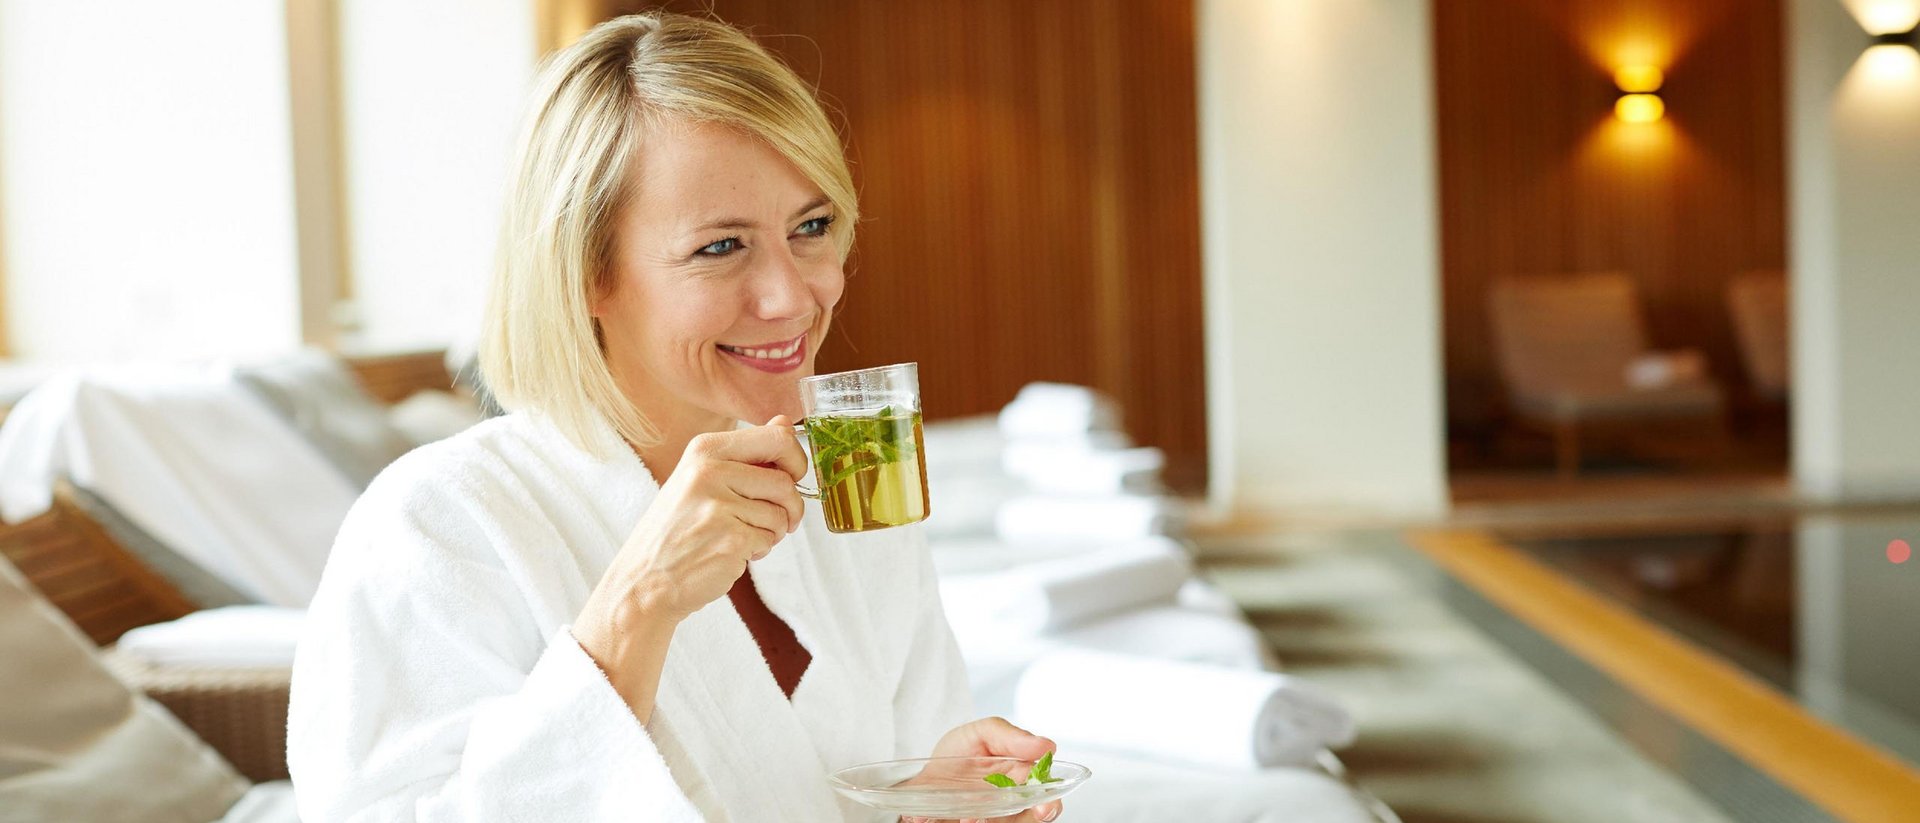 Hotel in Allgäu: 5 stars for your health